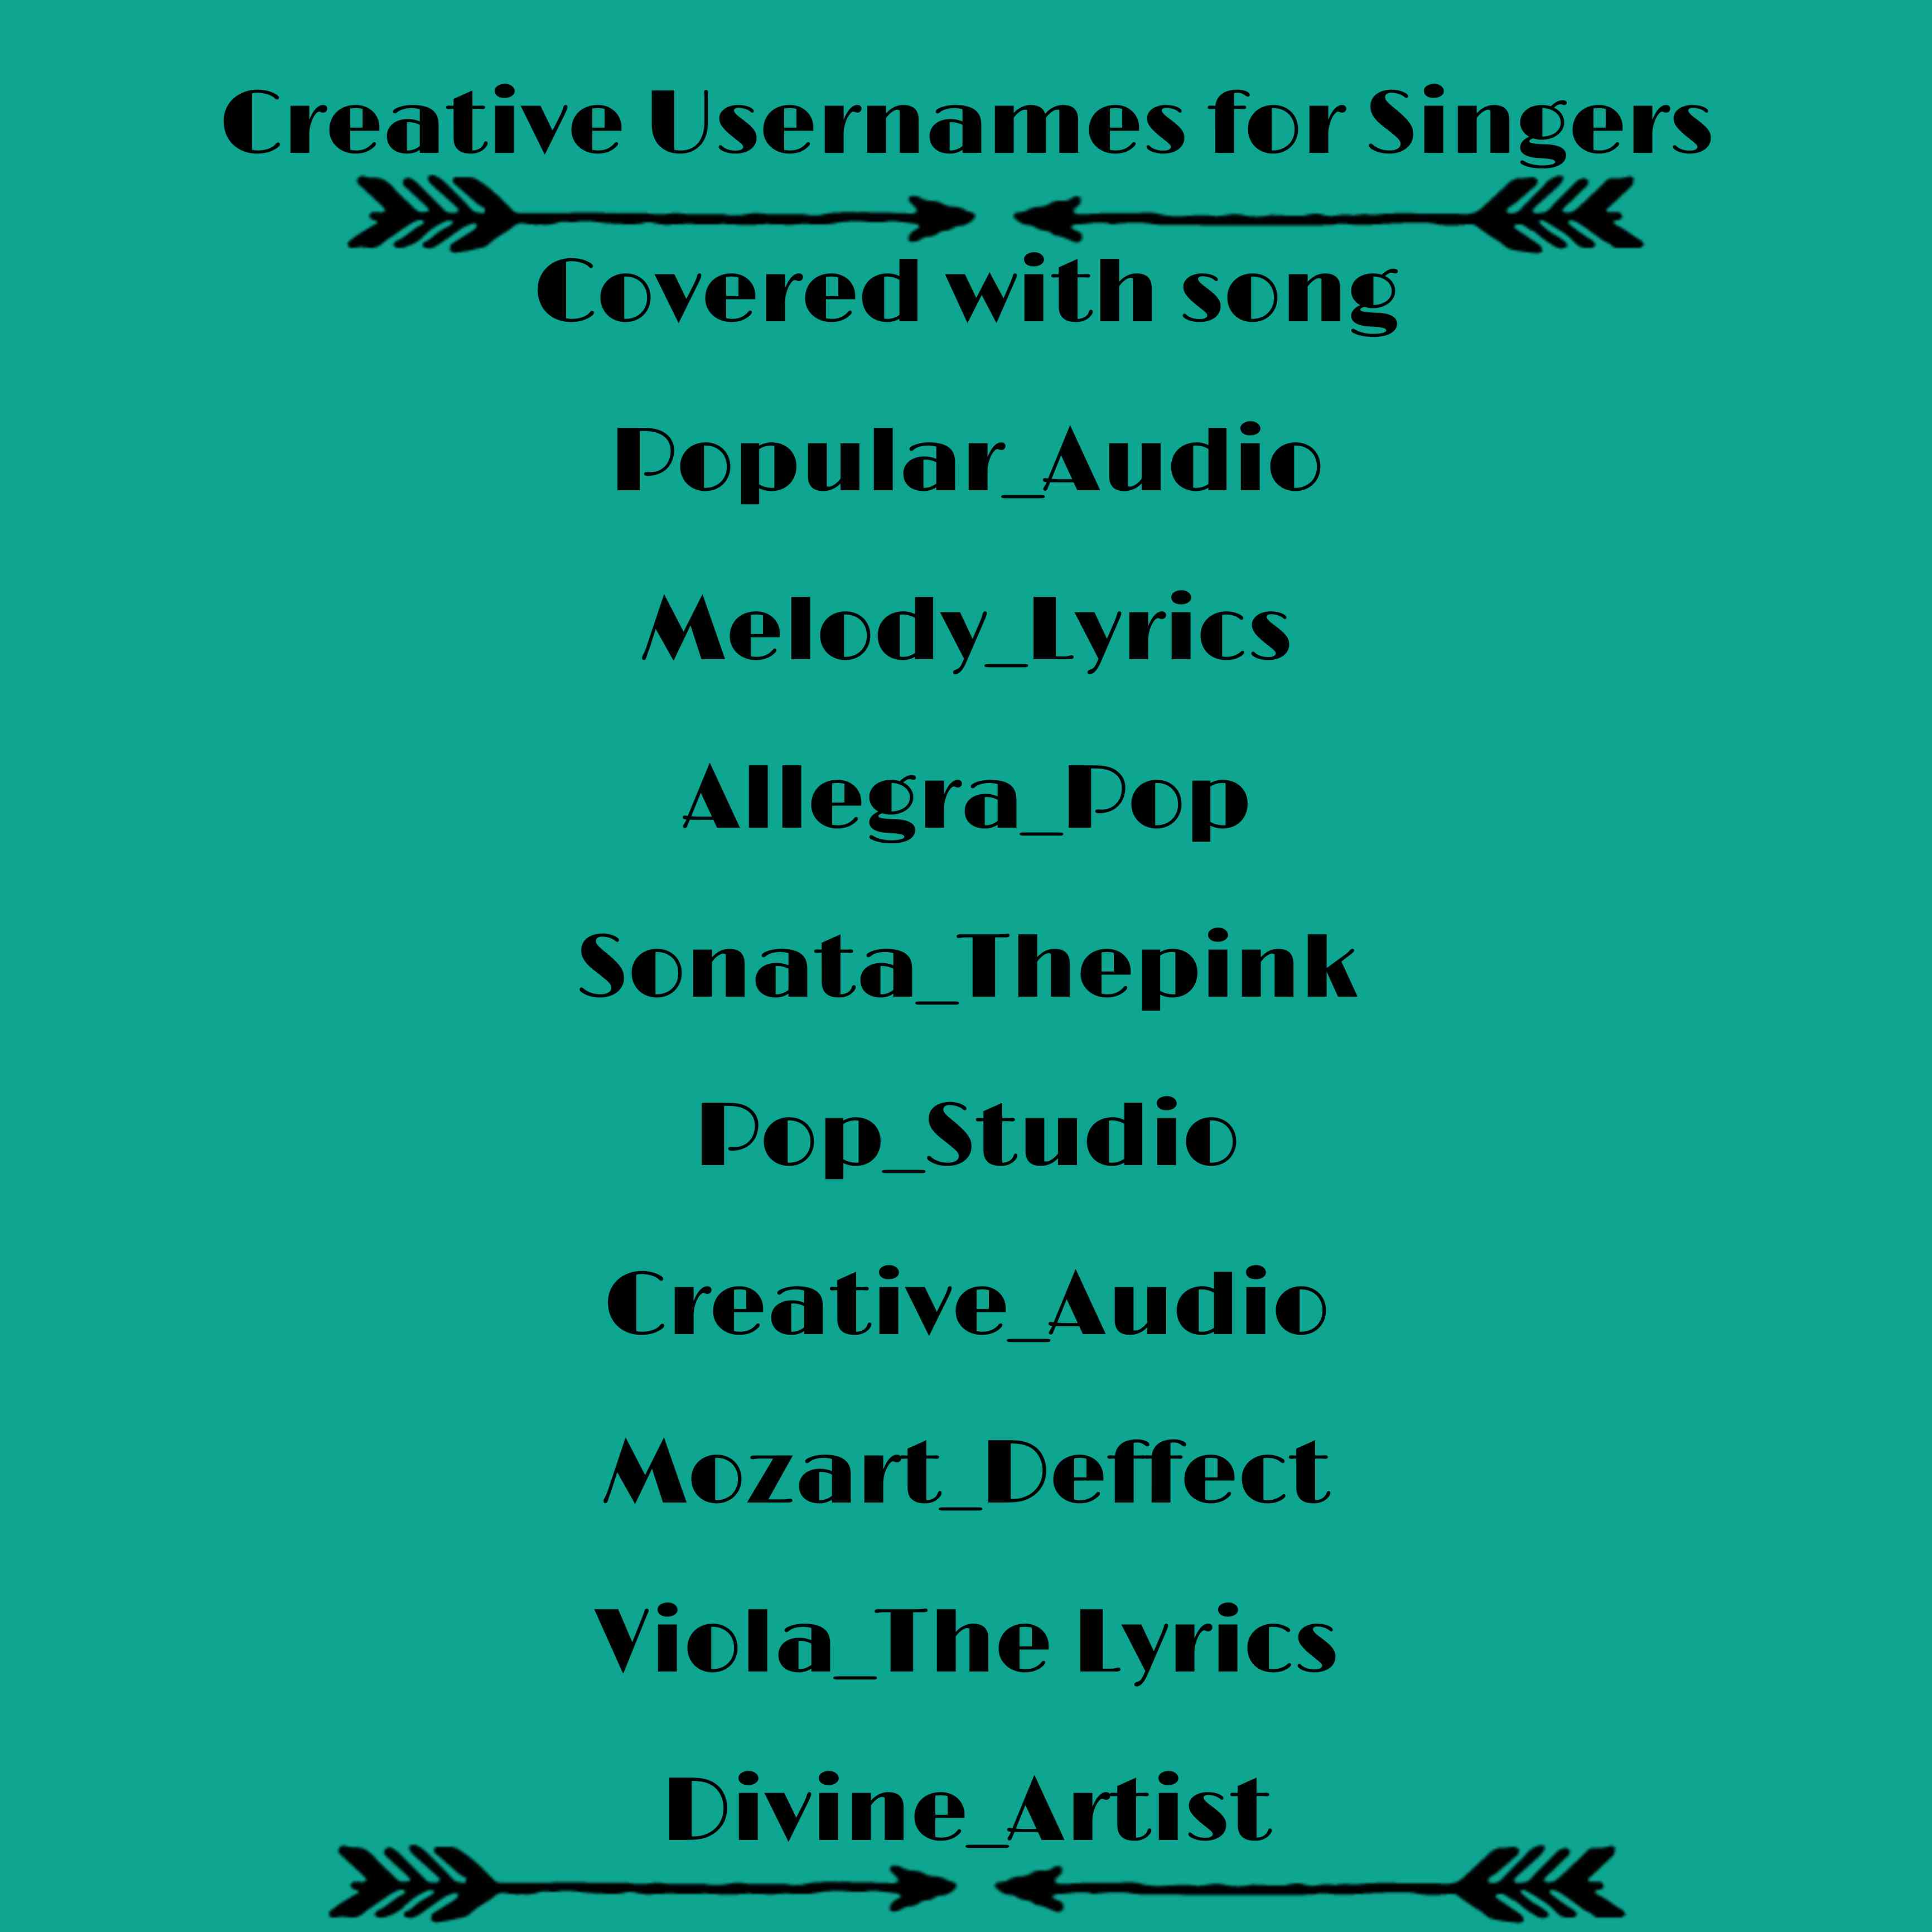 Creative Usernames for Singers